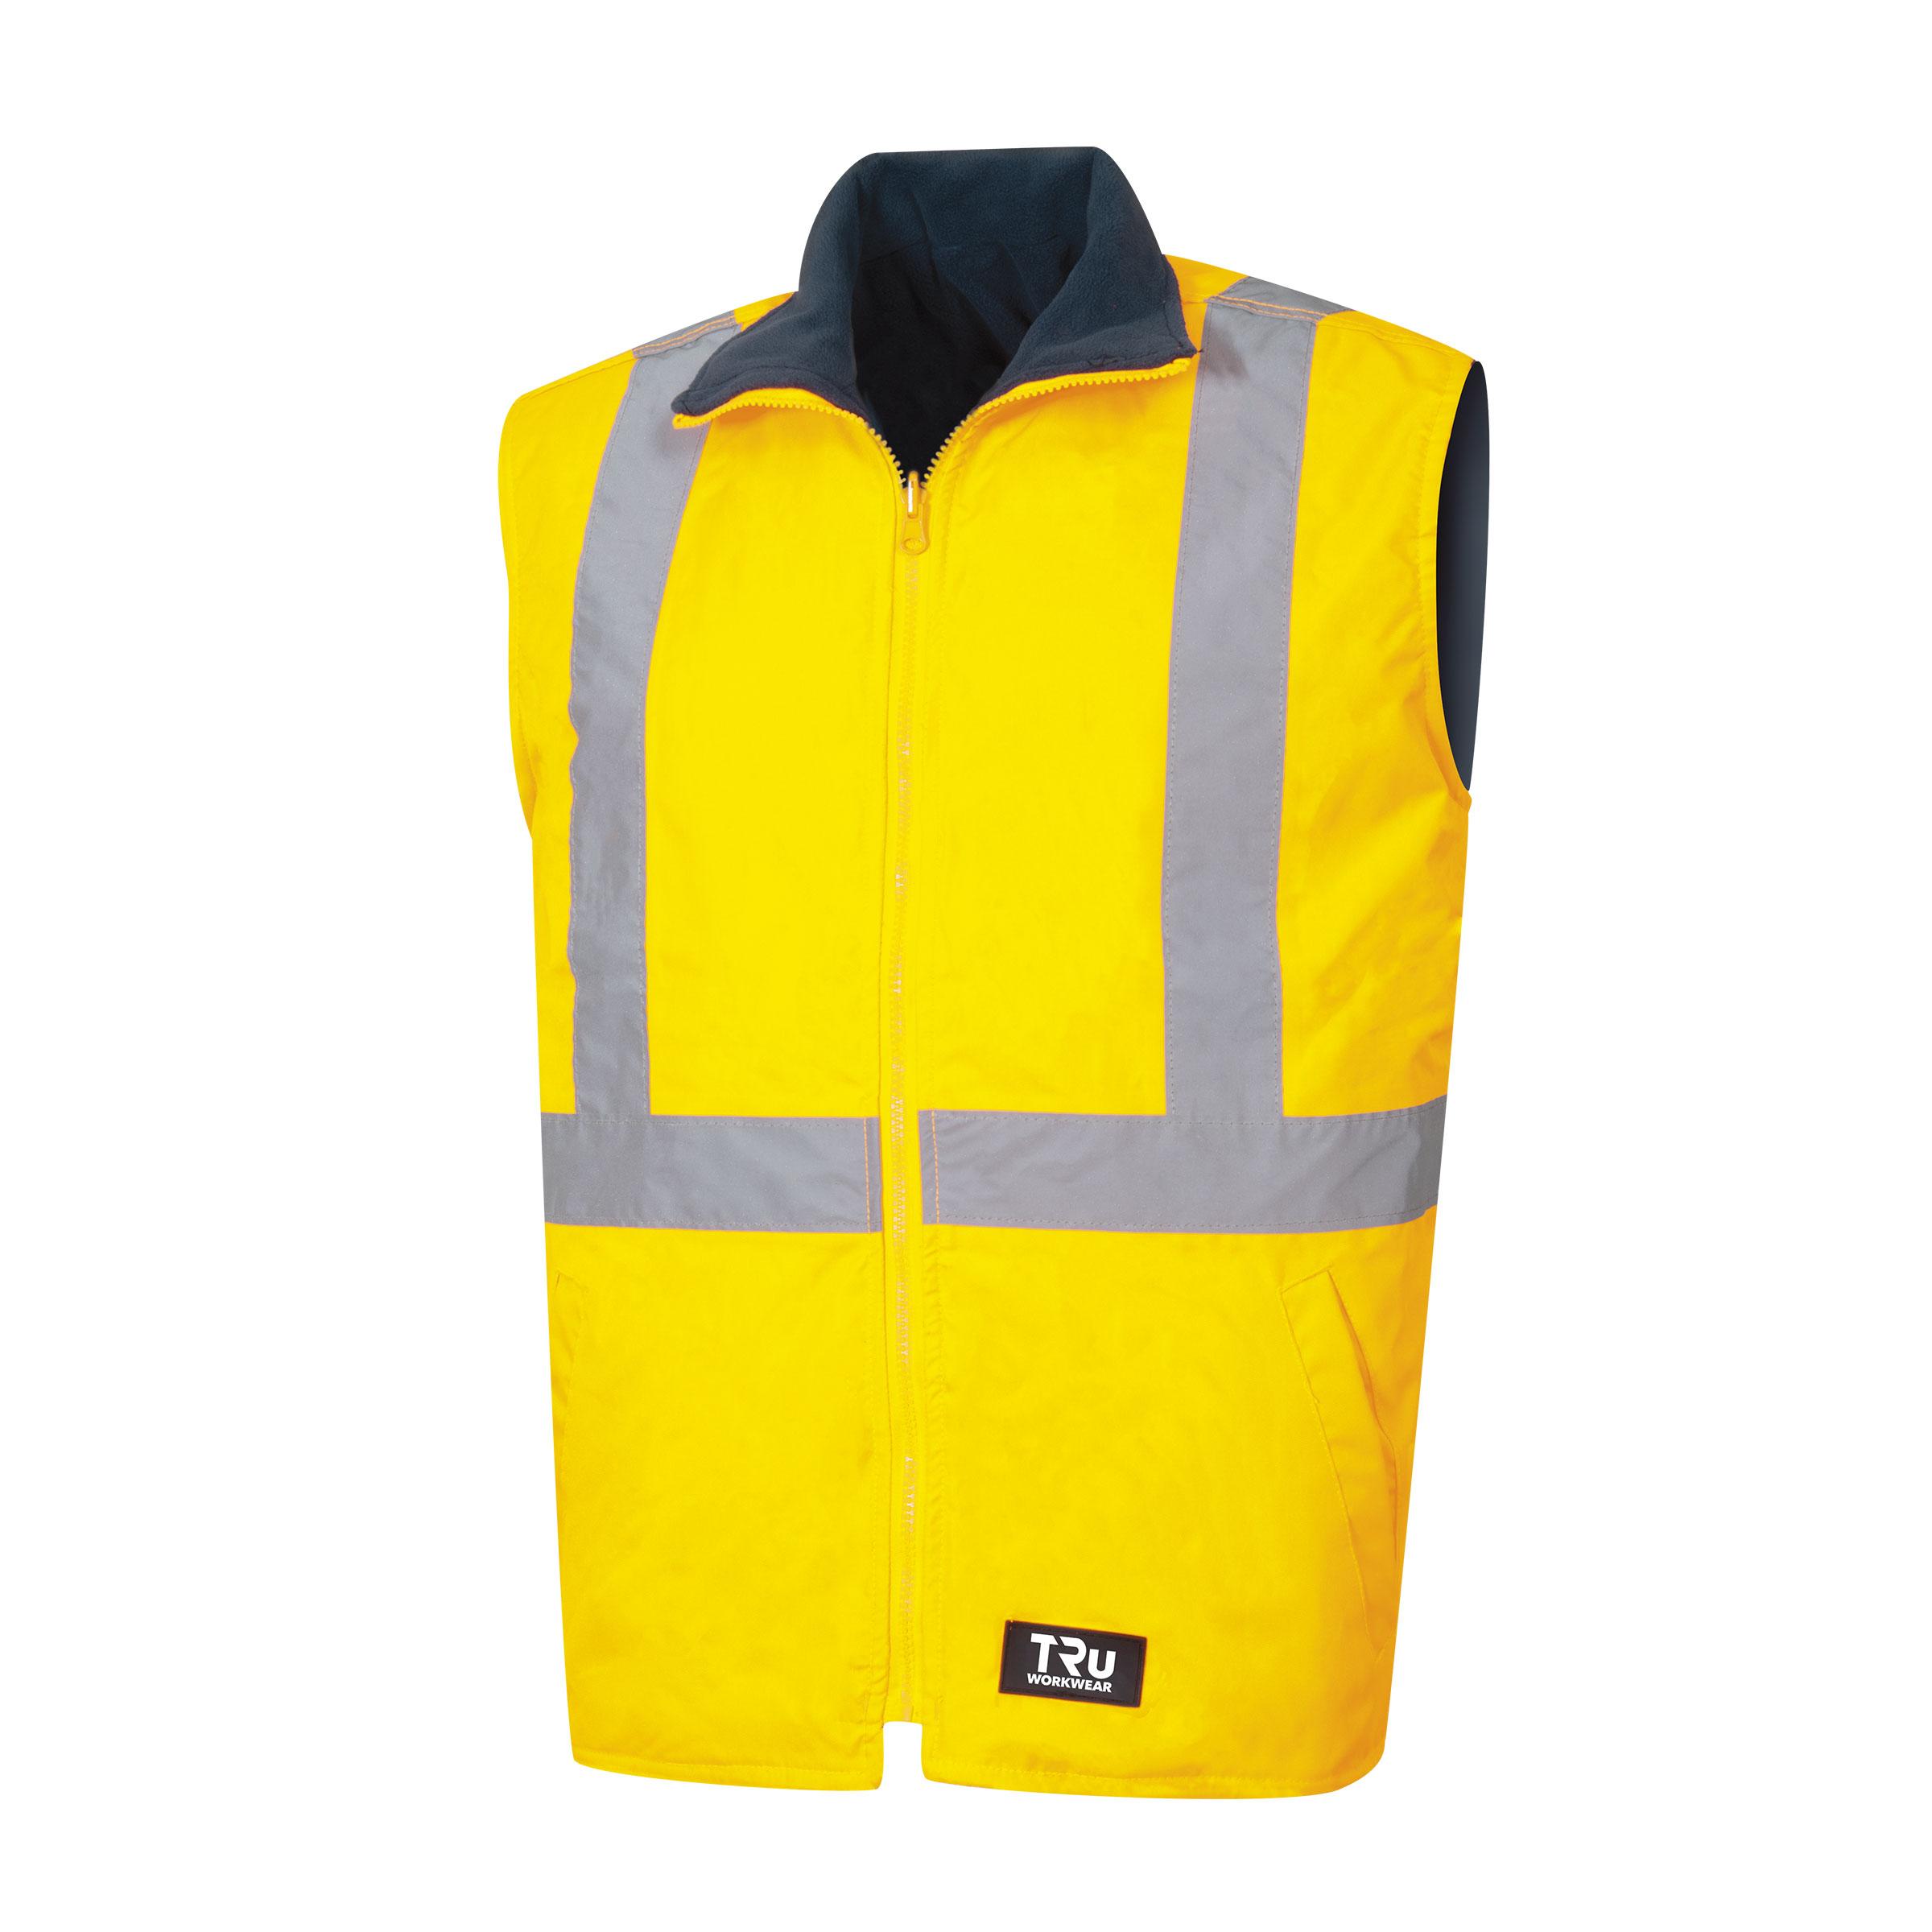 Tru Workwear Wet Weather Reversible Vest With Reflective Tape-Tru Workwear